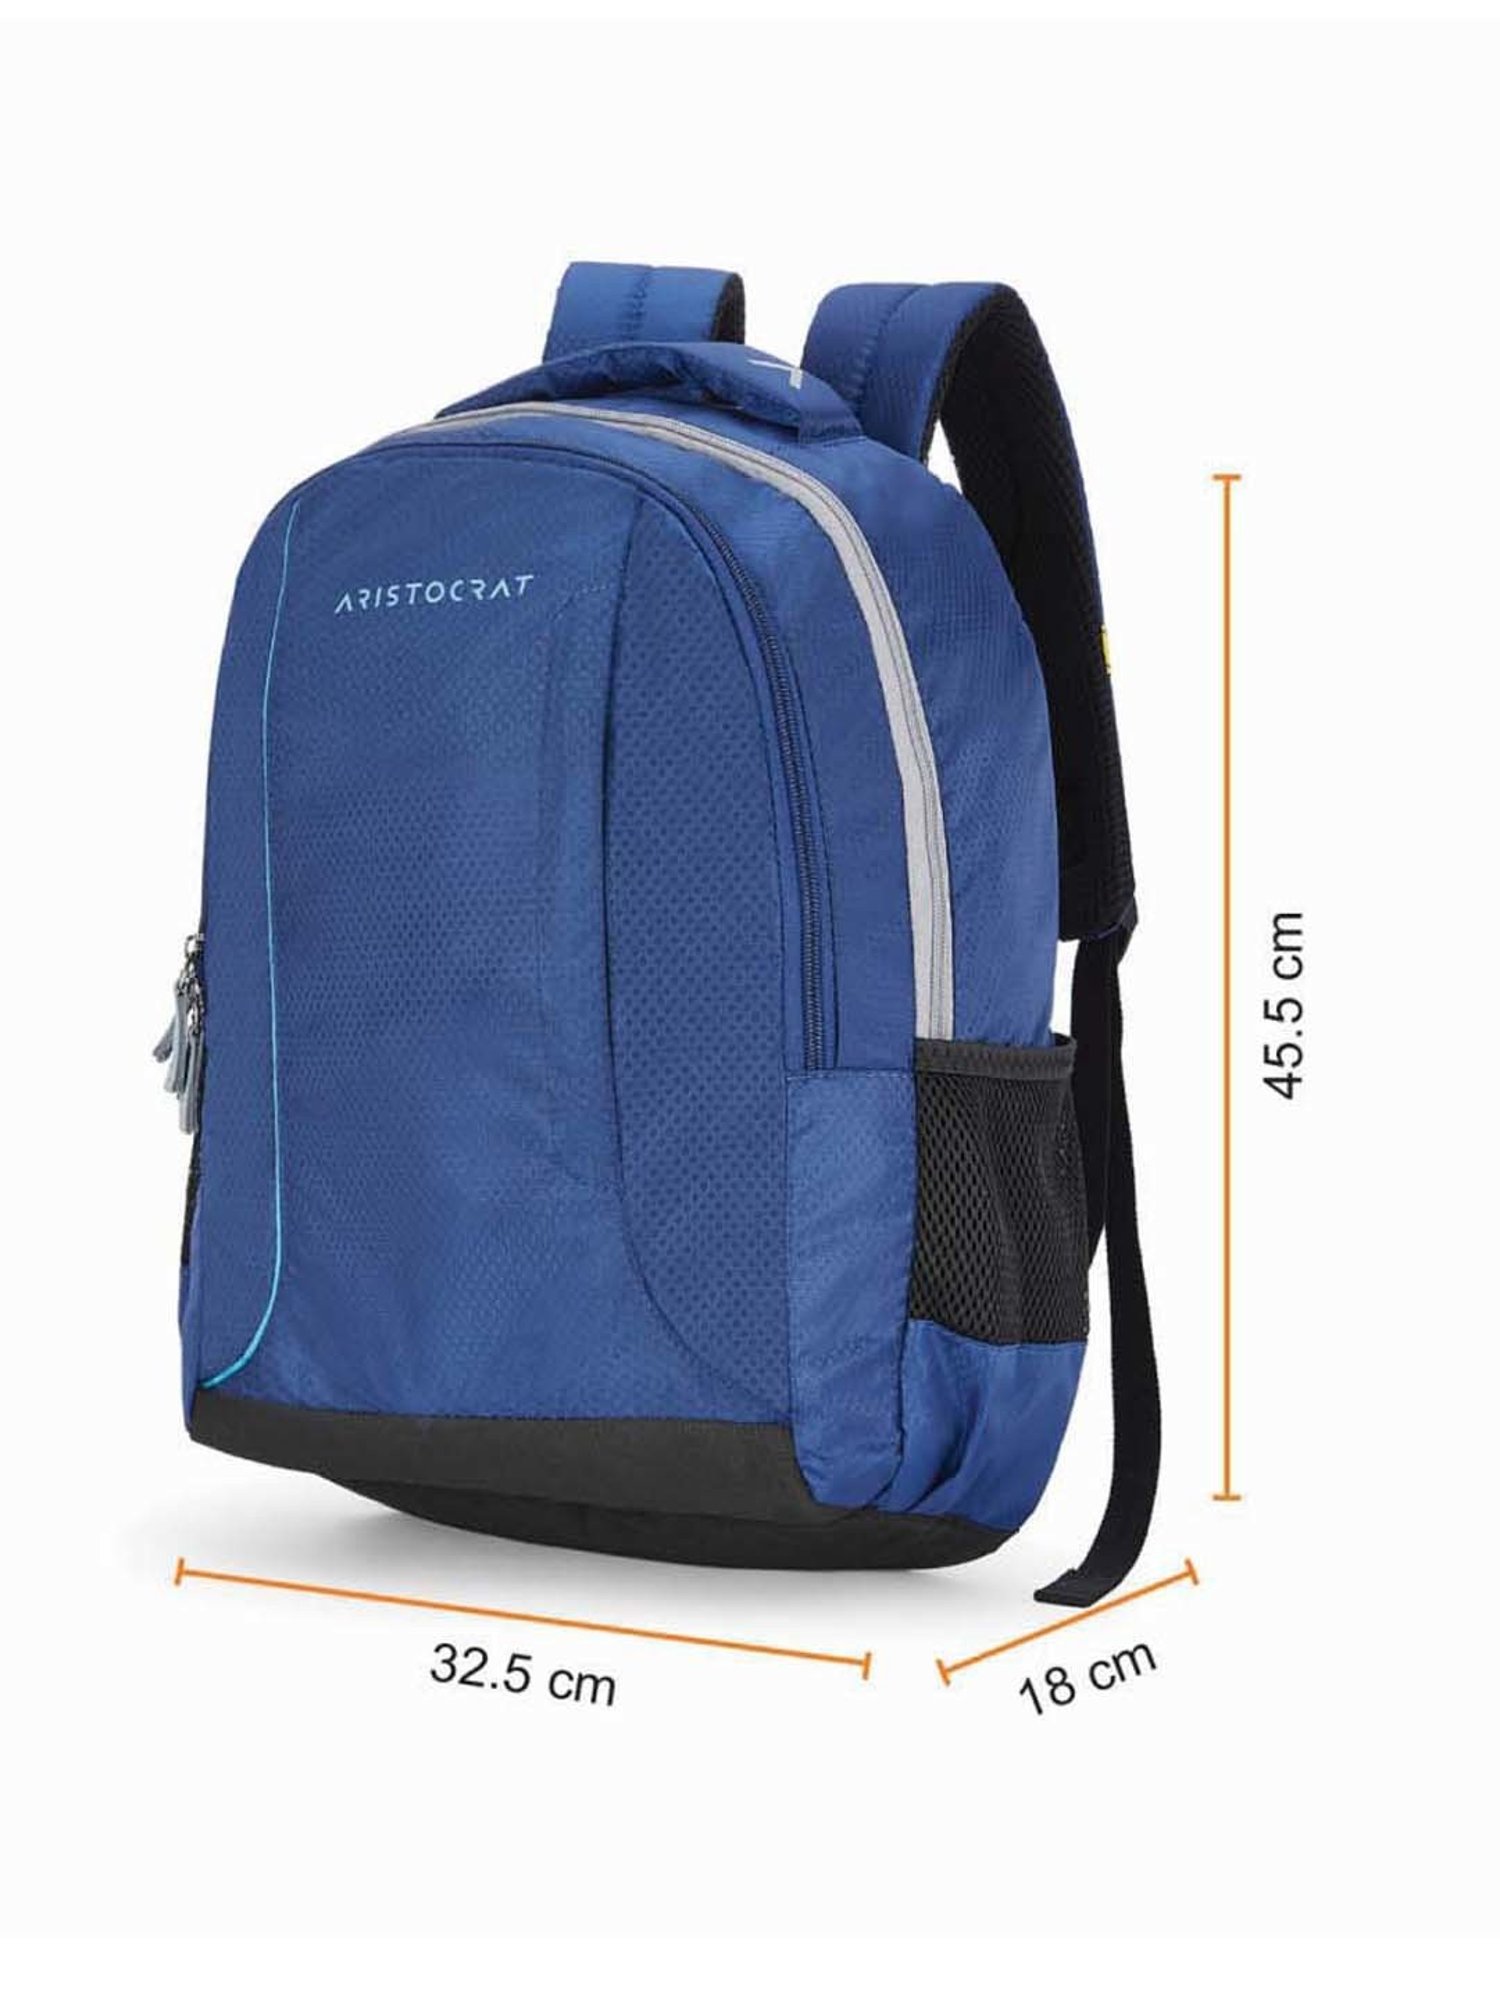 ARISTOCRAT Zing 25 L Backpack Fawn - Price in India | Flipkart.com